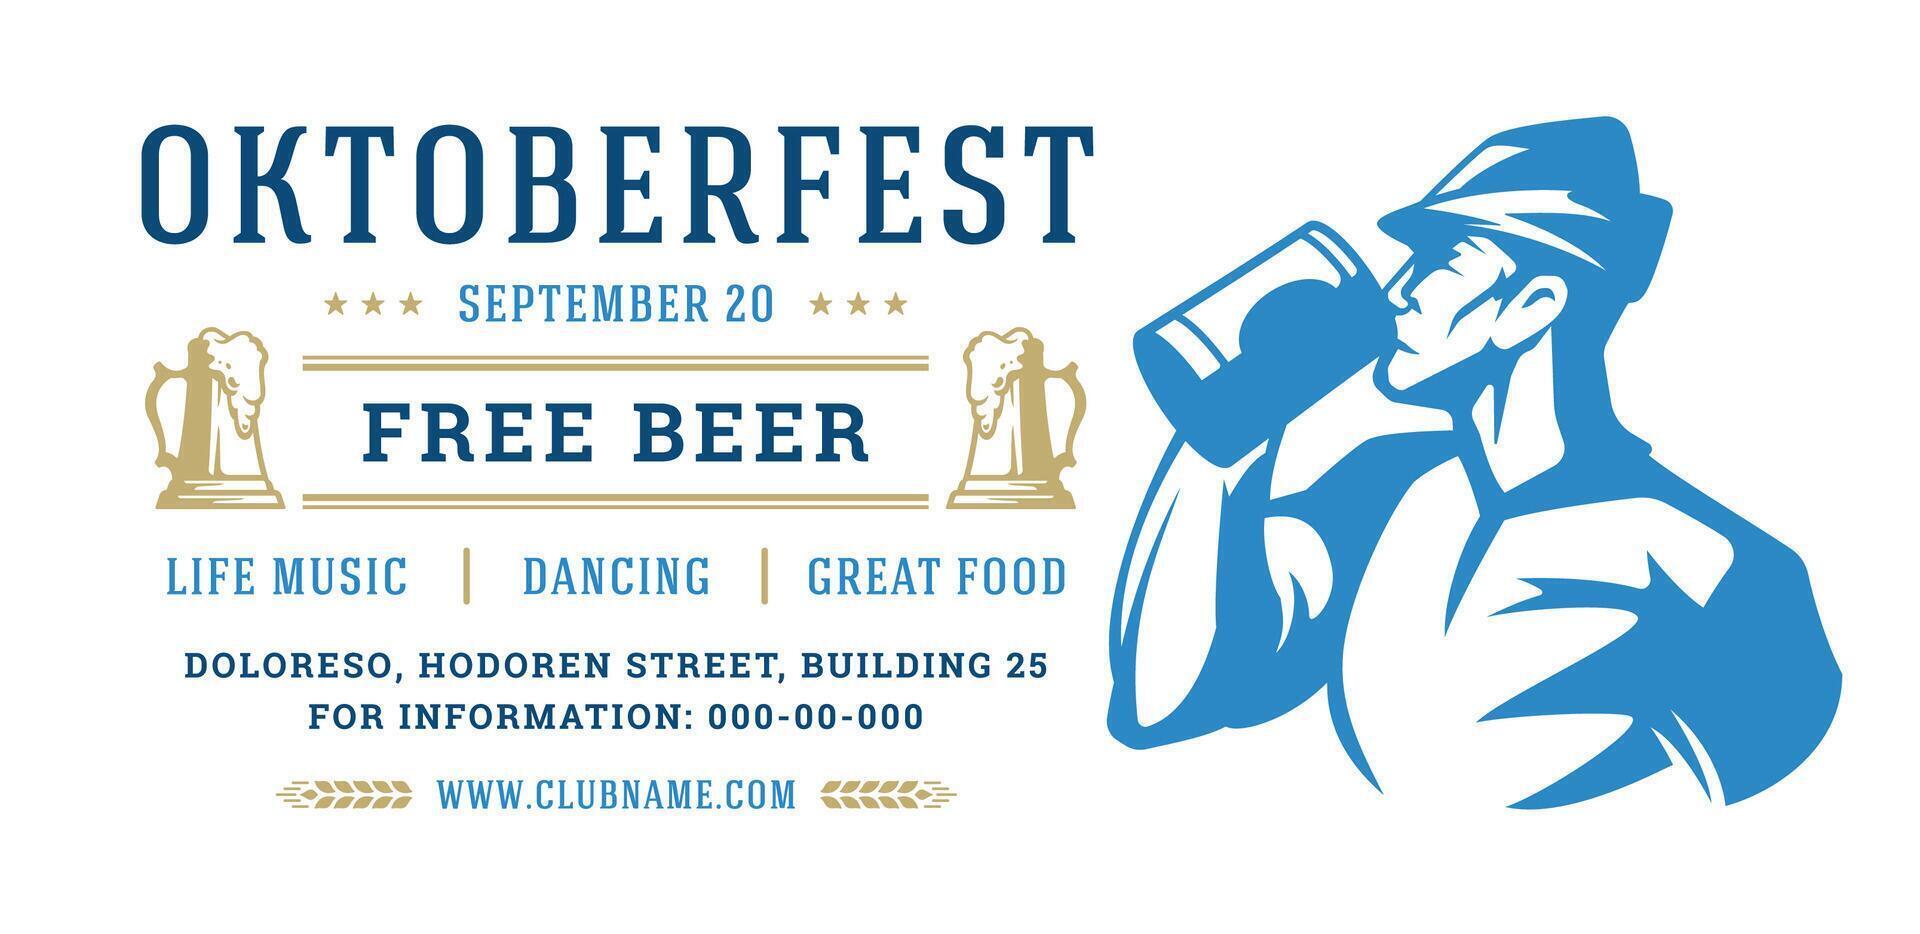 Oktoberfest flyer or banner retro typography template design willkommen zum invitation beer festival celebration. vector